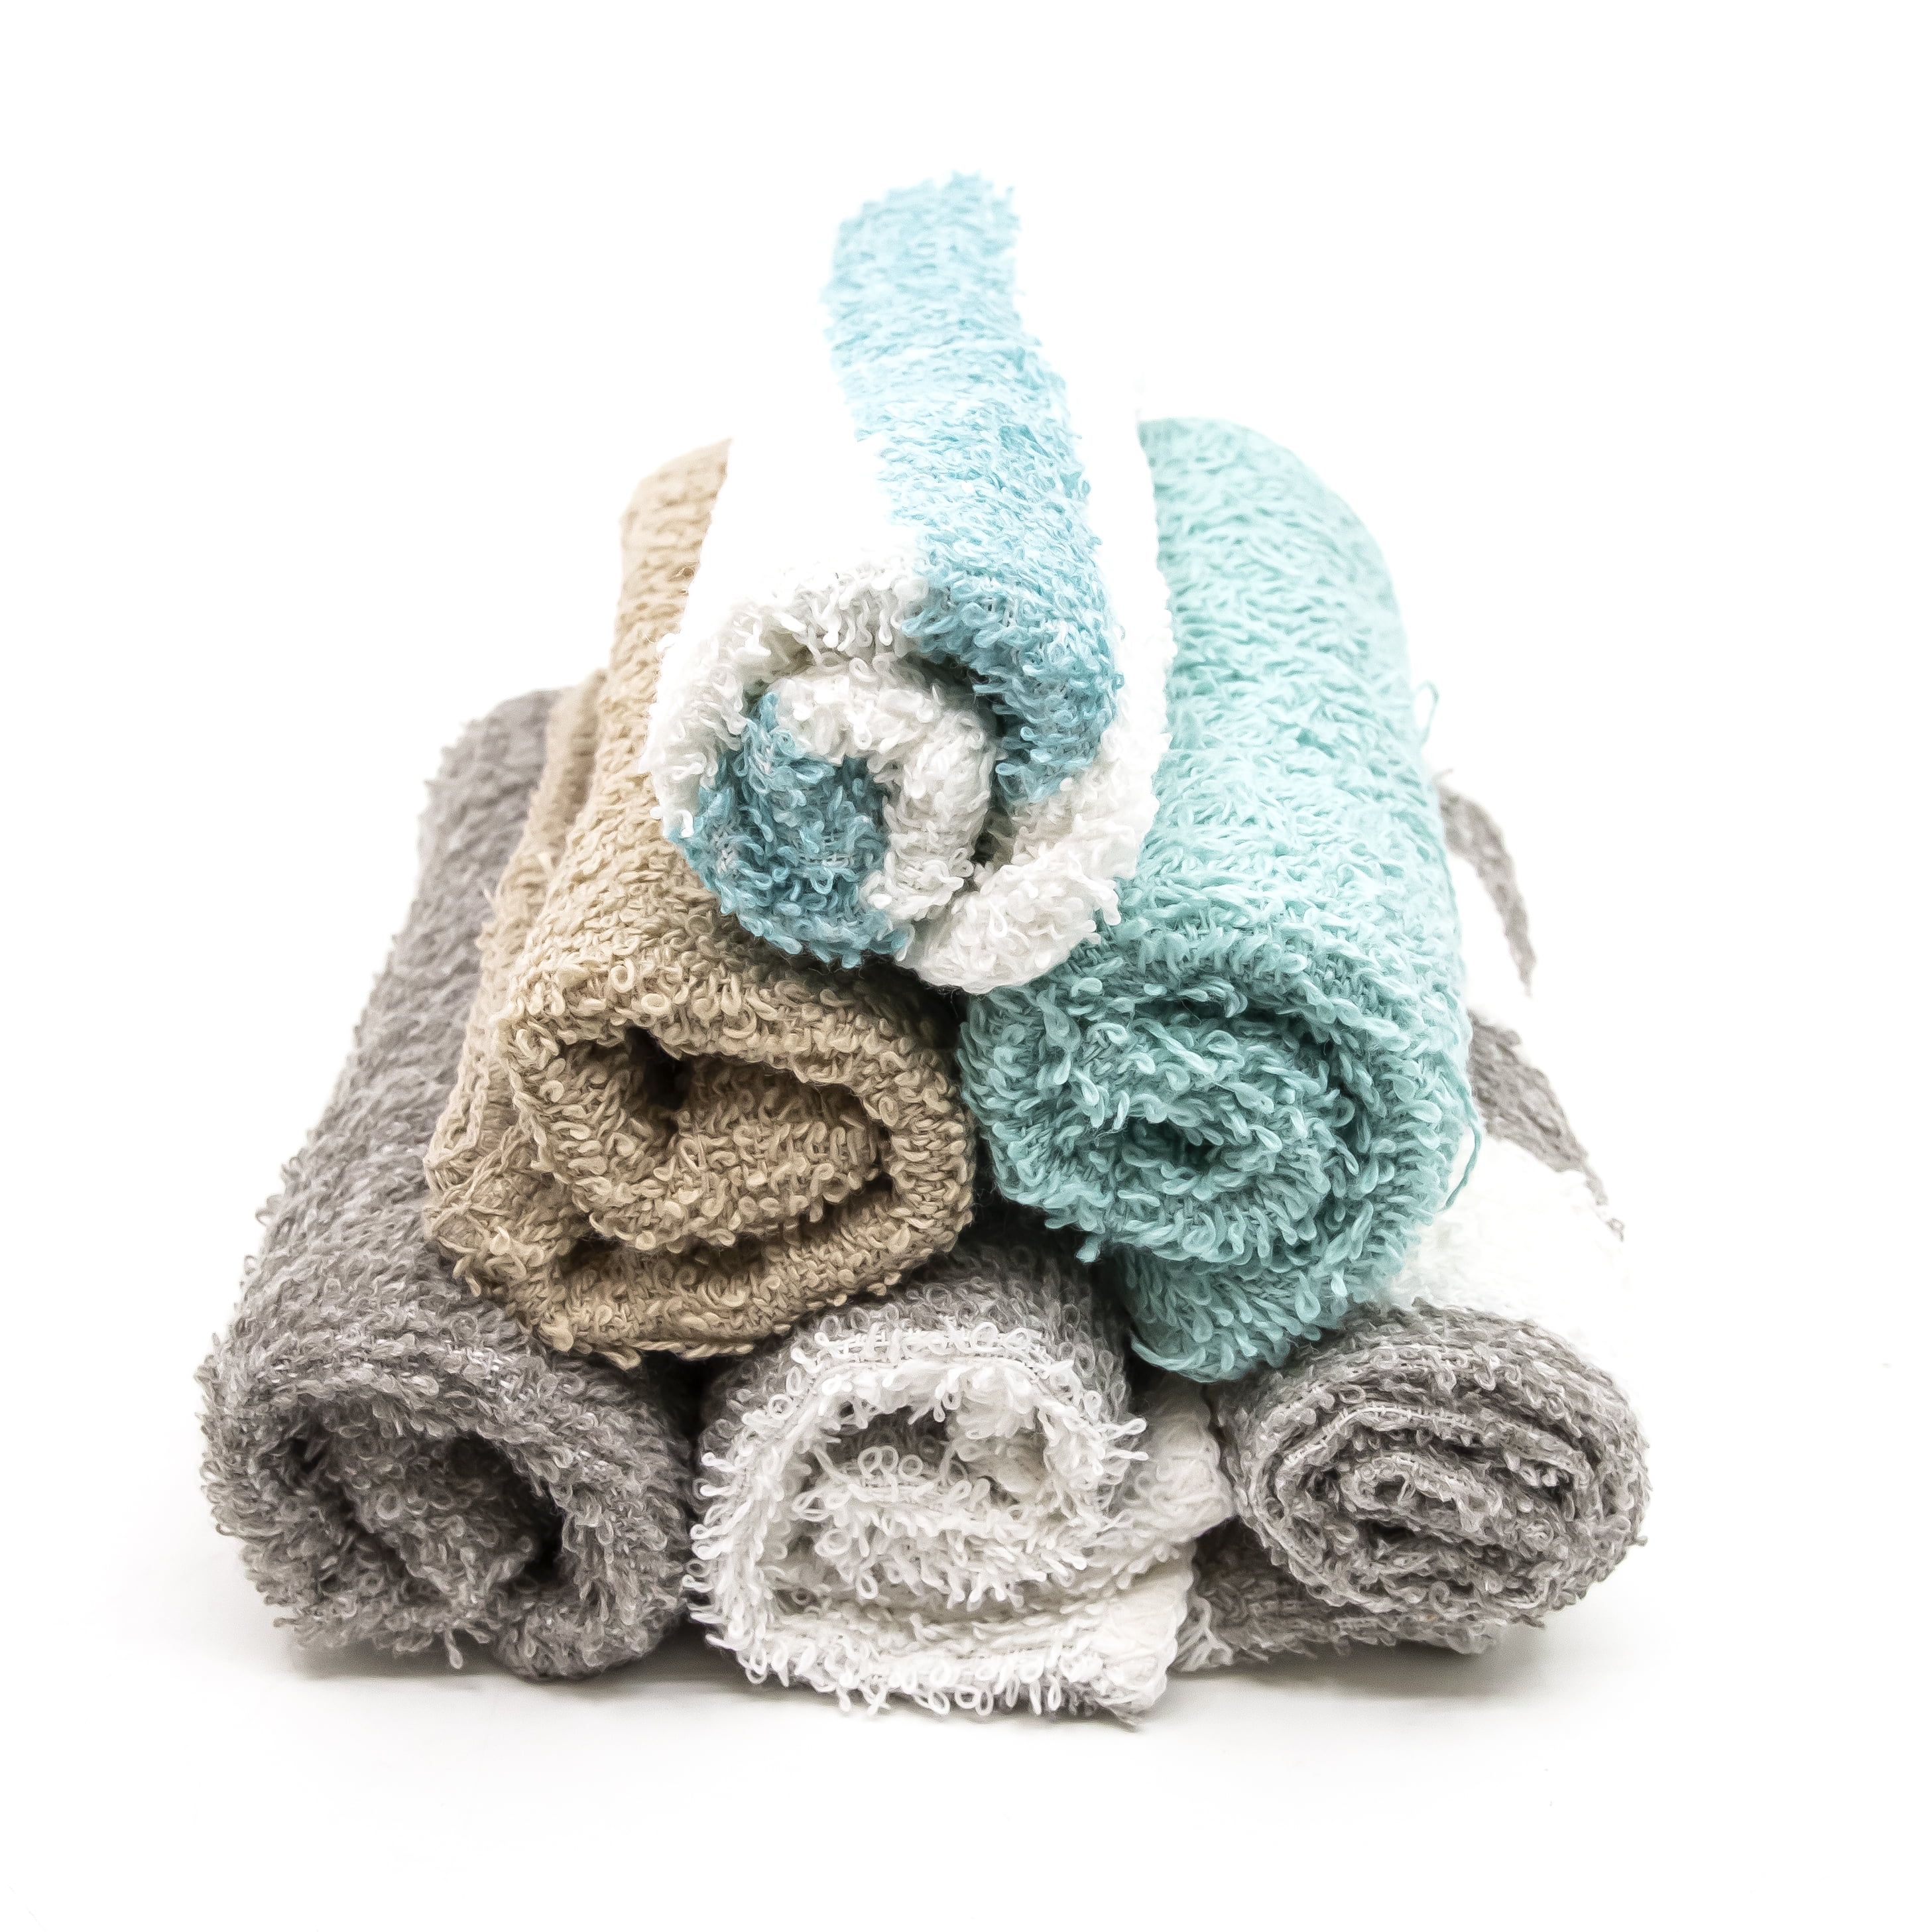 Tudomro 52 Pack Wash Cloths 13 x 13 Face Washcloths Bulk Cotton